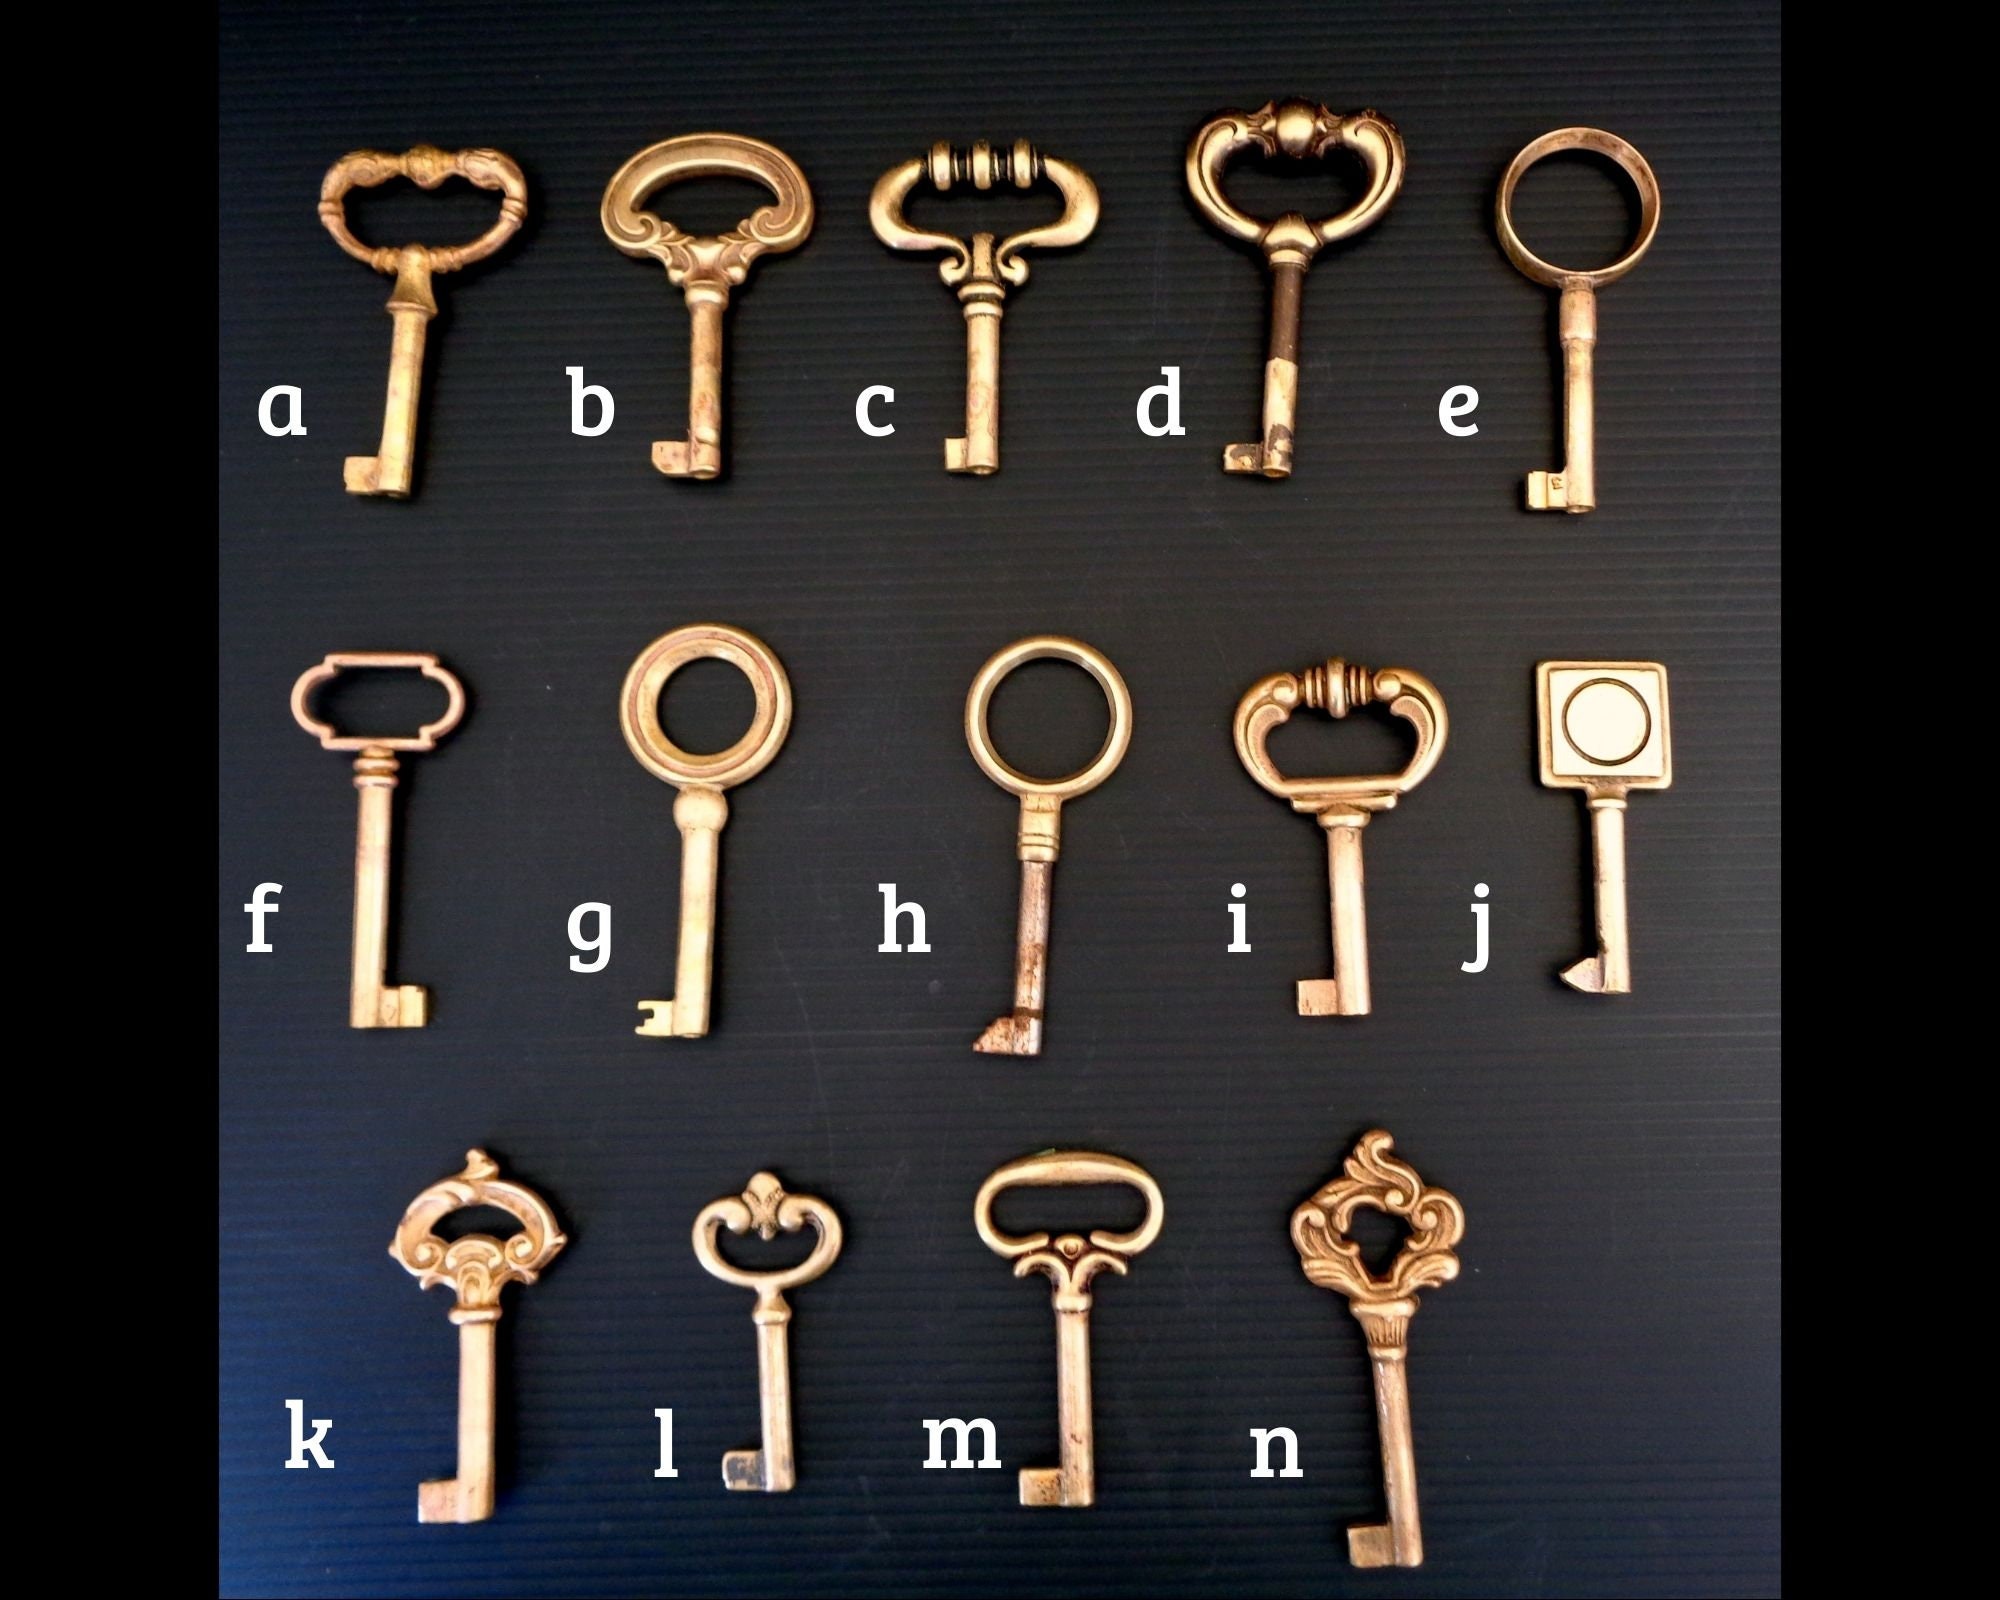 2er Set alte Schlüssel Türschlüssel - Vintage Retro